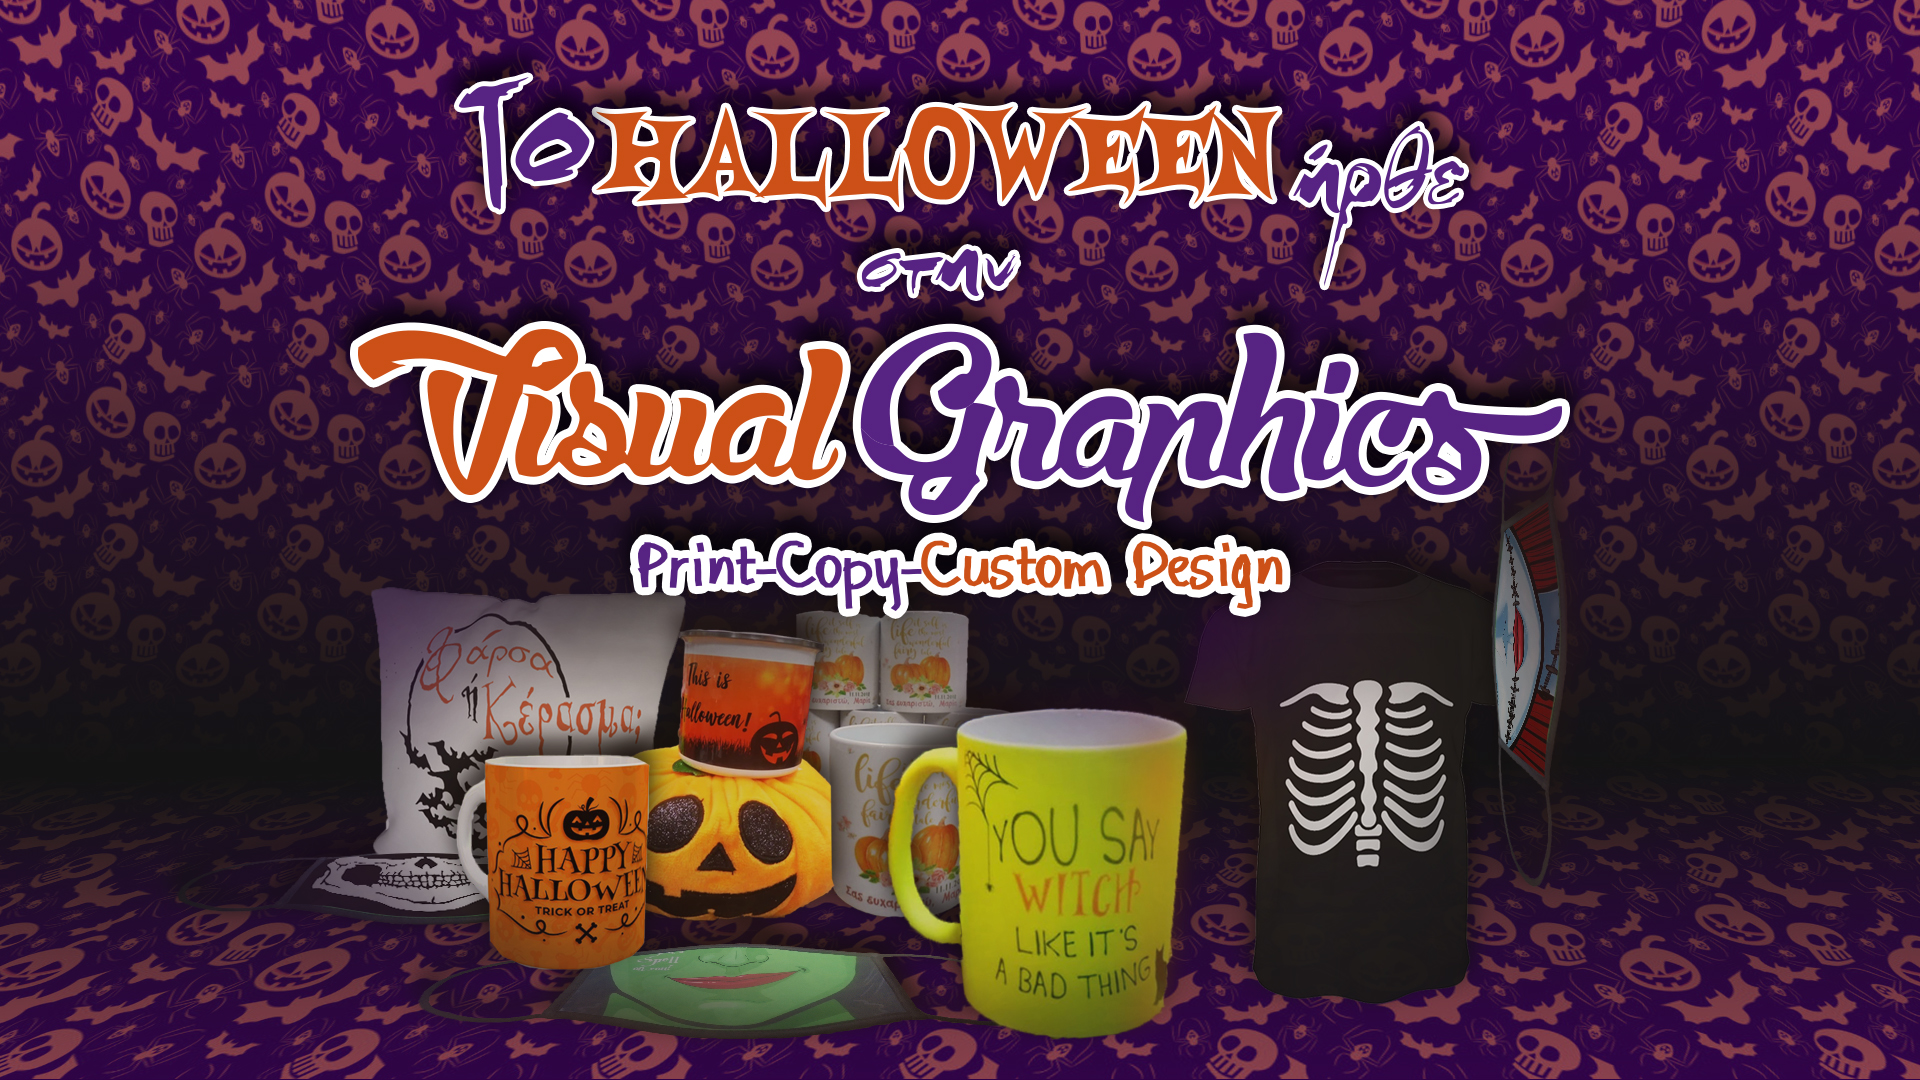 Halloween στην Visualgraphics custom